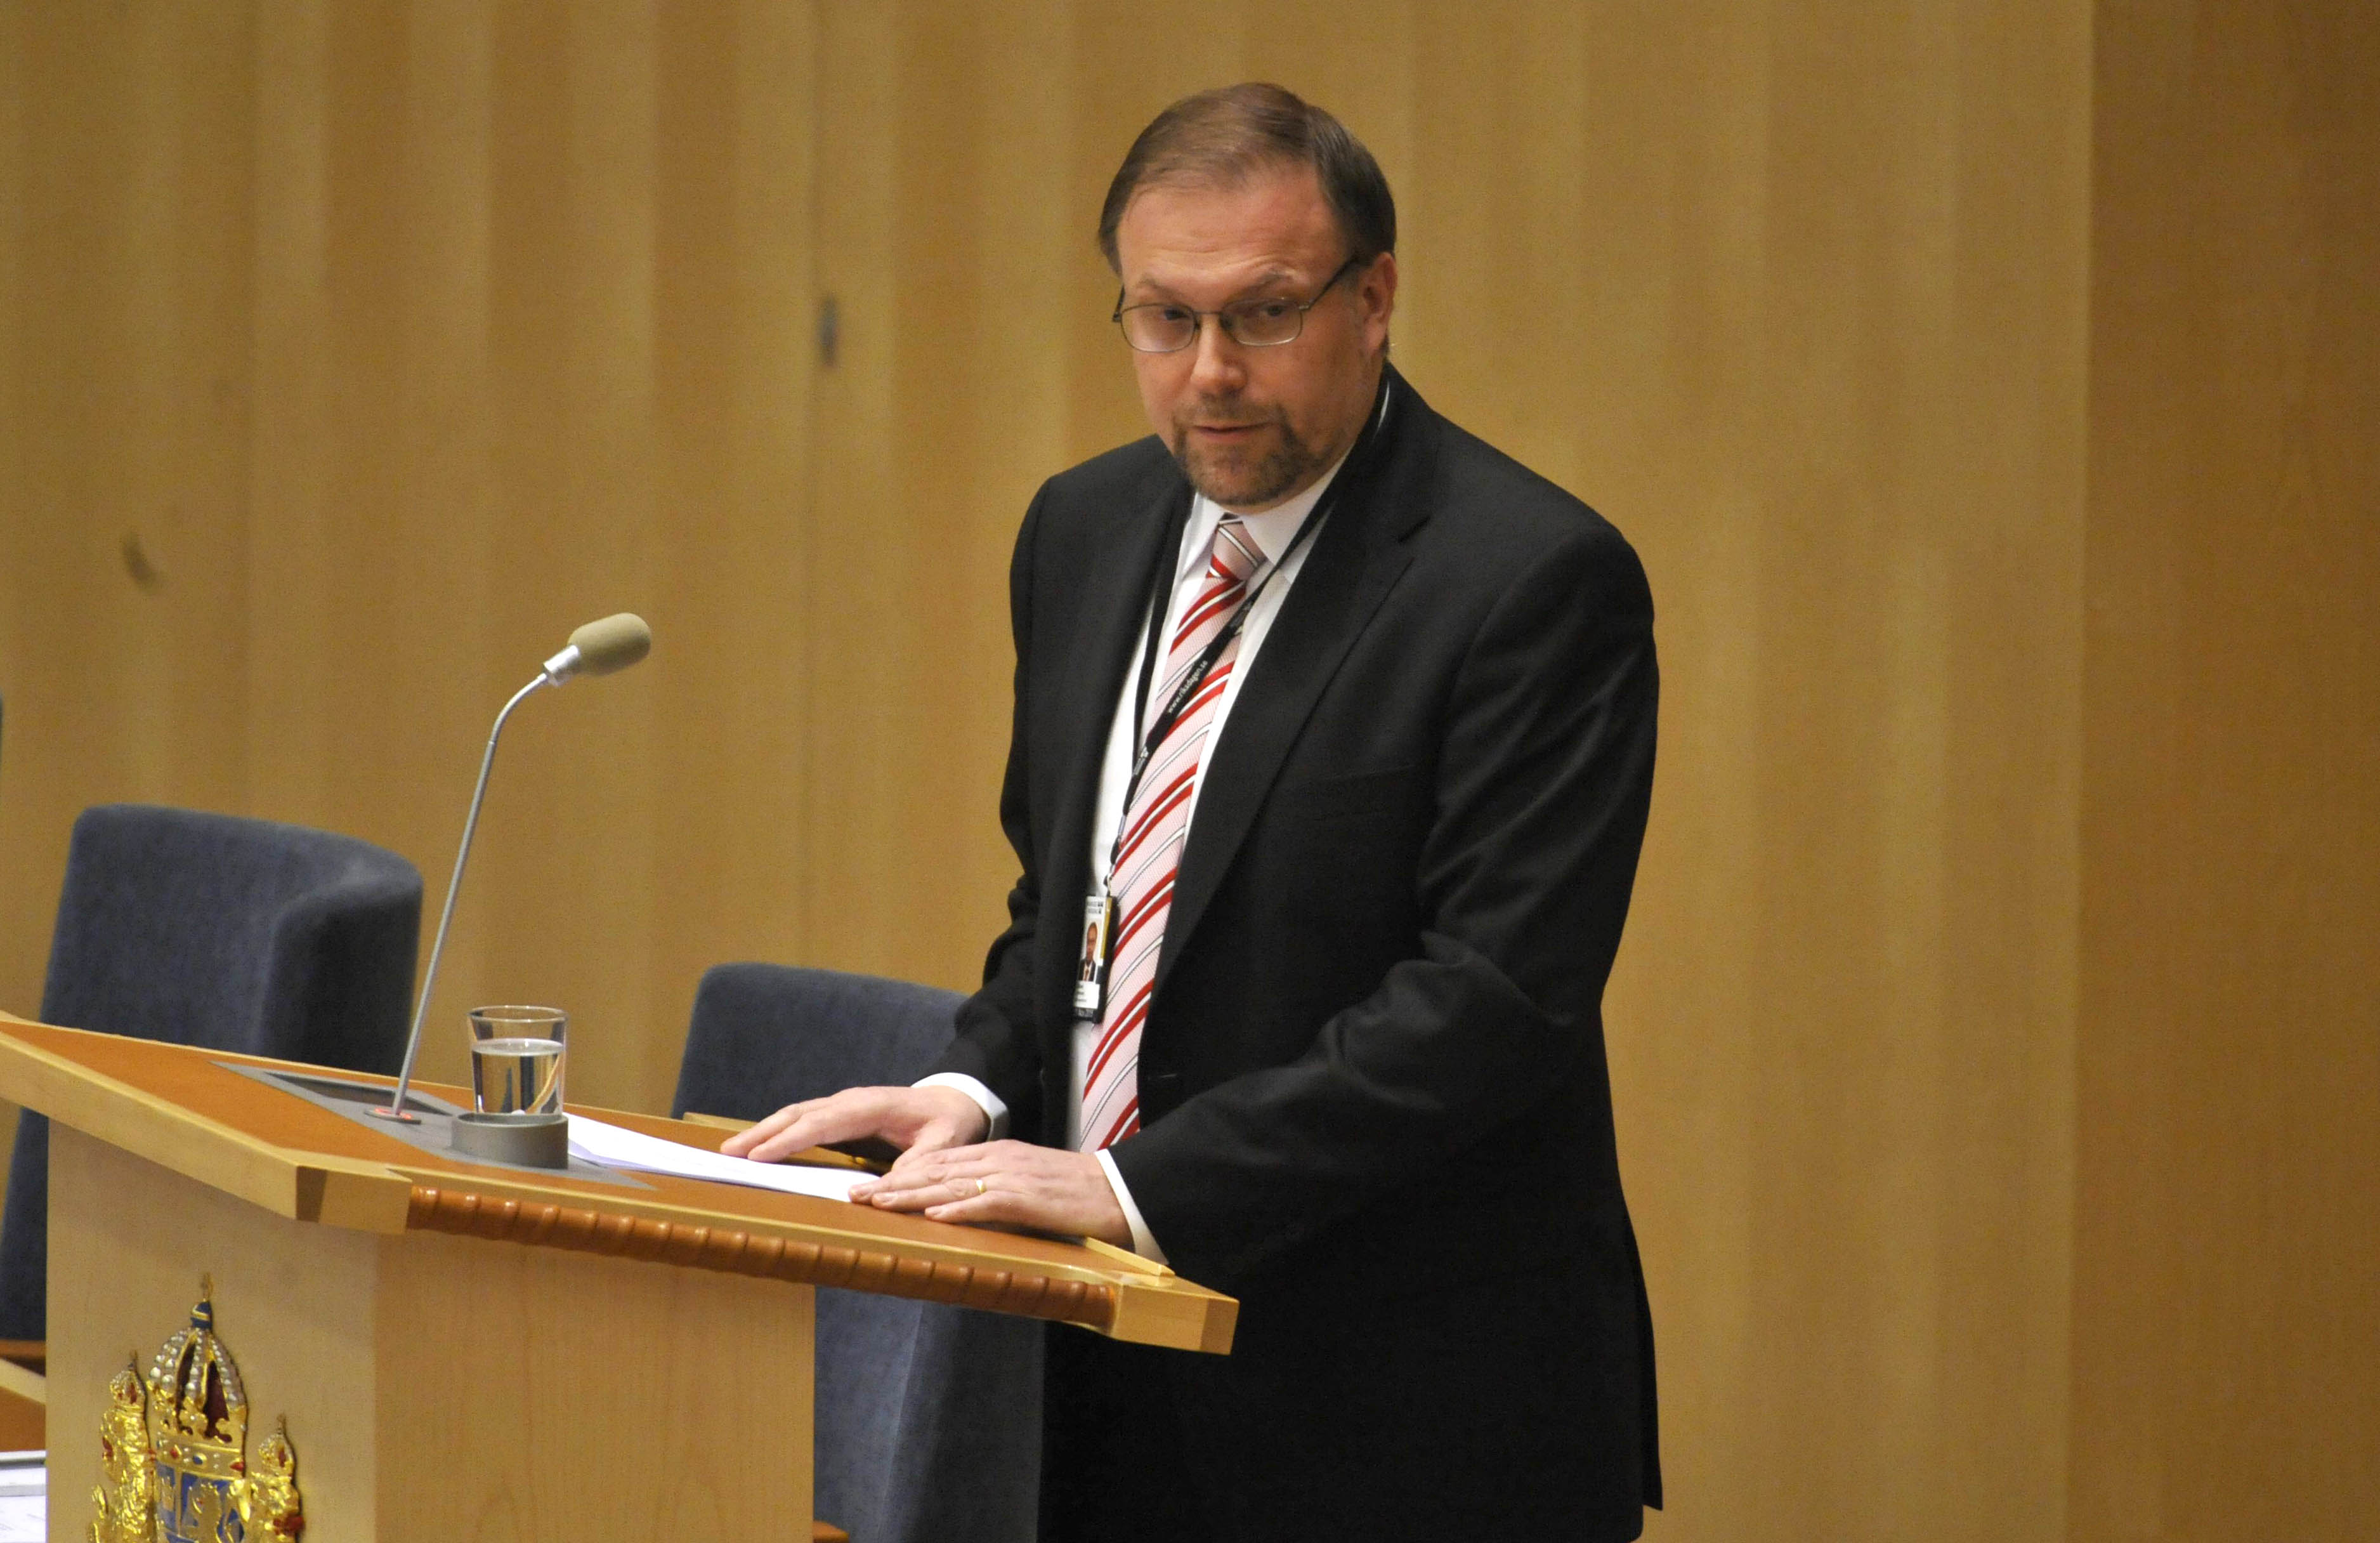 Patrik Ehn, Sverigedemokraterna, Mikael Jansson